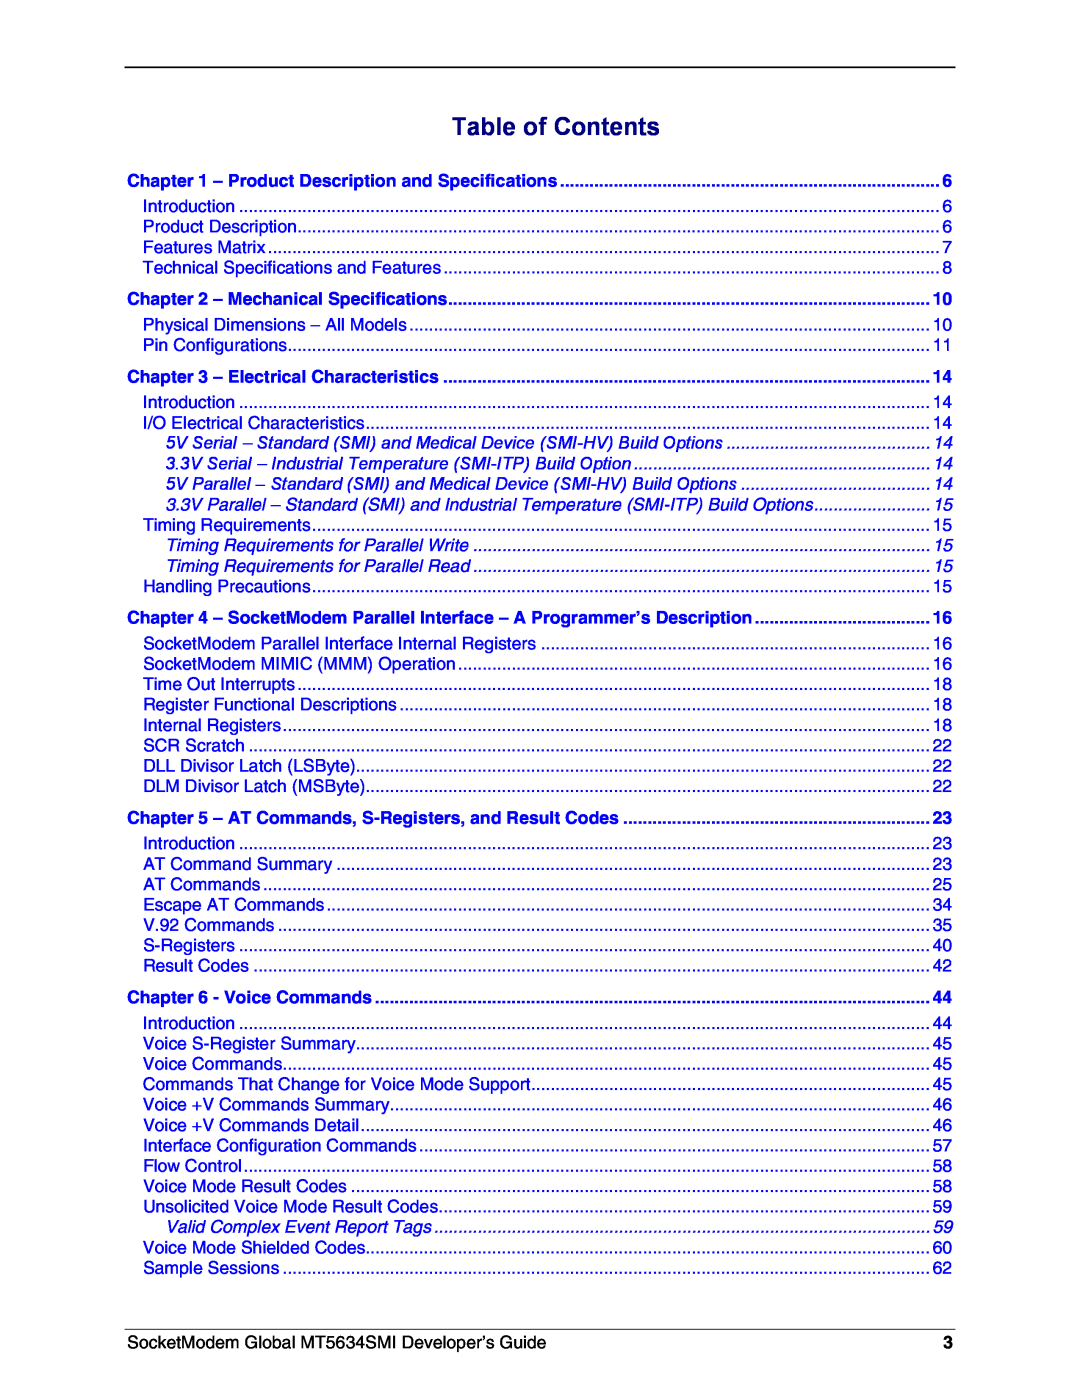 Technics MT5634SMI-34 manual SocketModem Global MT5634SMI Developer’s Guide, Table of Contents, Mechanical Specifications 